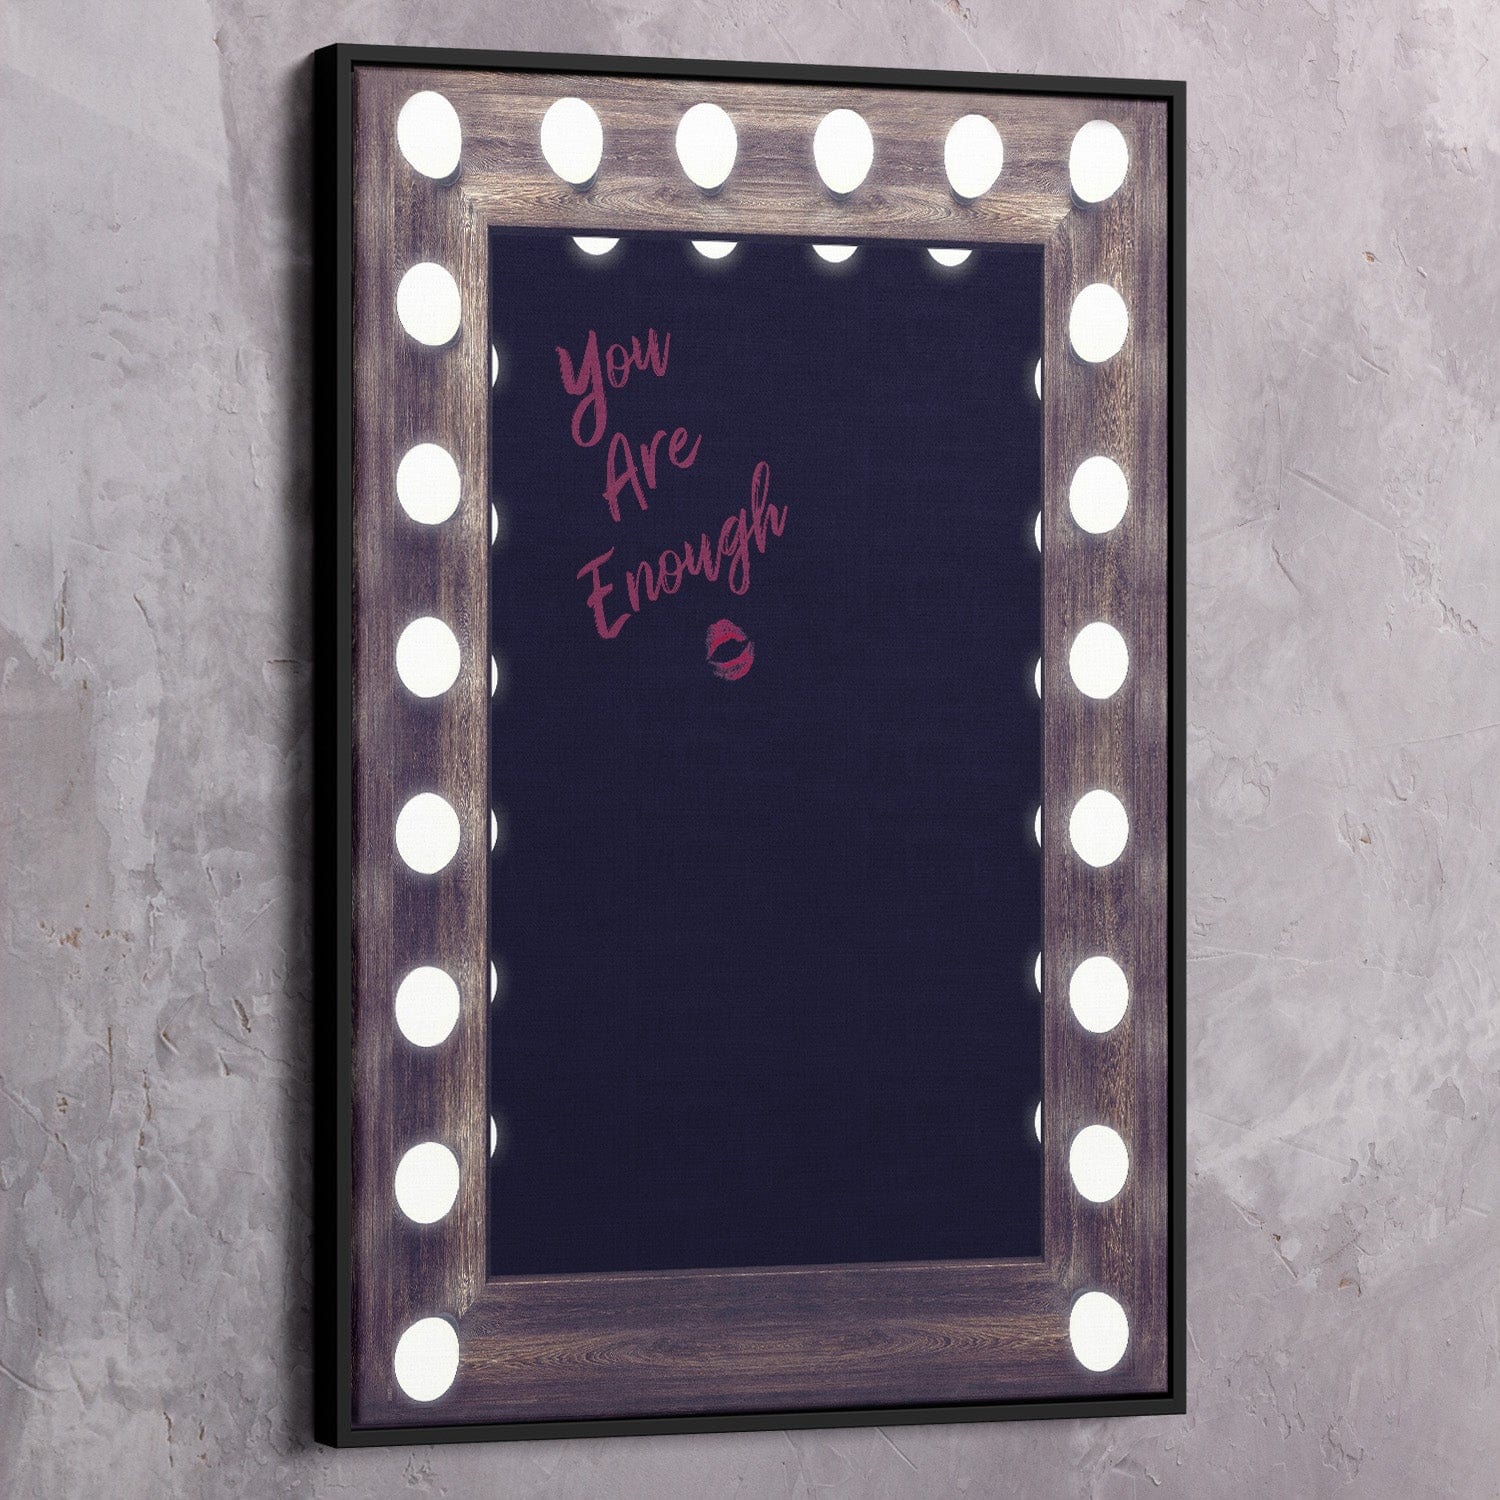 Mirror Quote - You Are Enough Wall Art | Inspirational Wall Art Motivational Wall Art Quotes Office Art | ImpaktMaker Exclusive Canvas Art Portrait